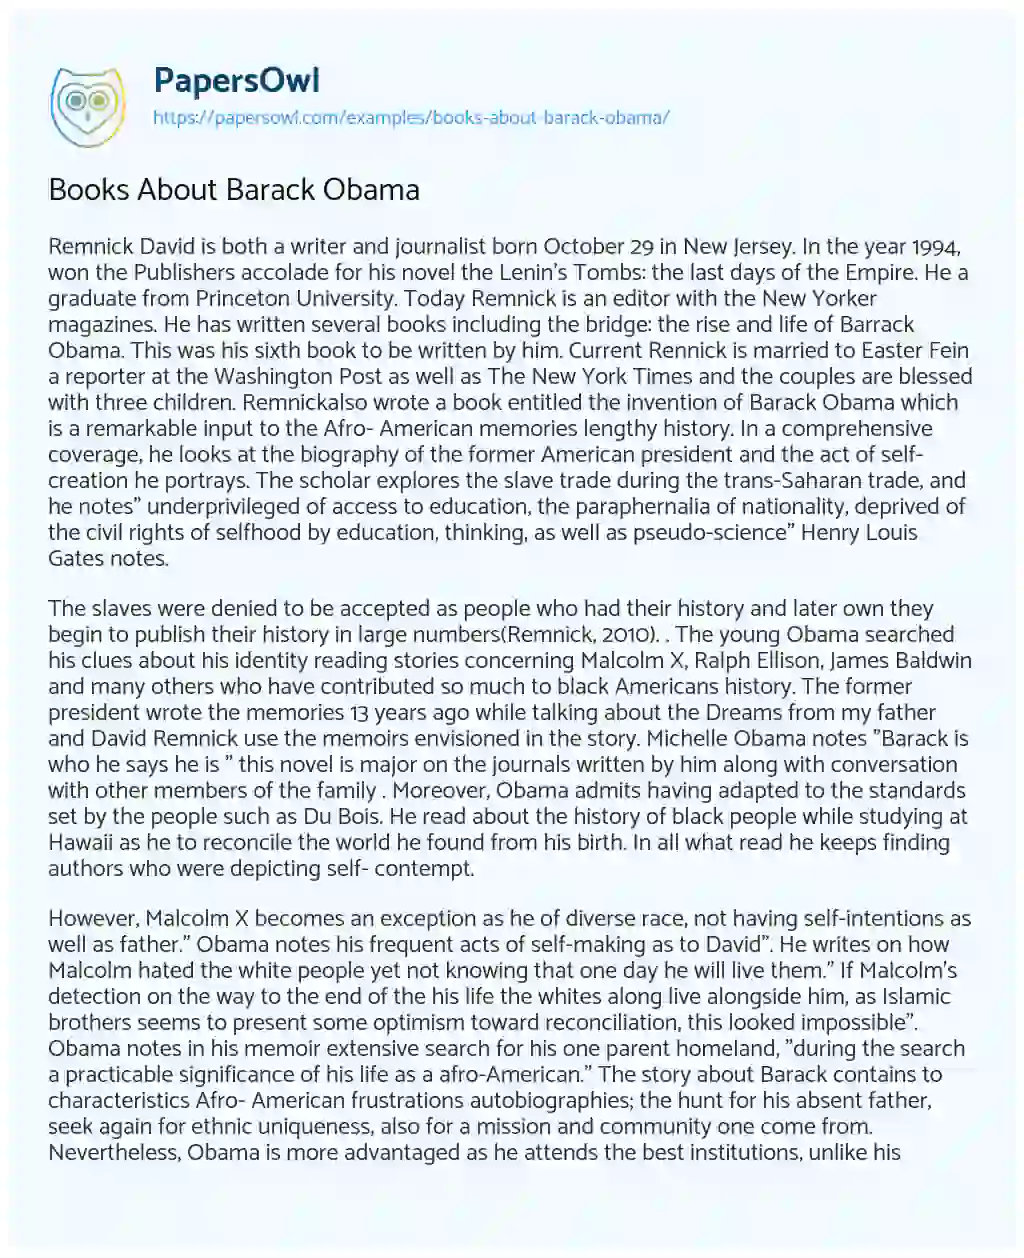 Essay on Books about Barack Obama